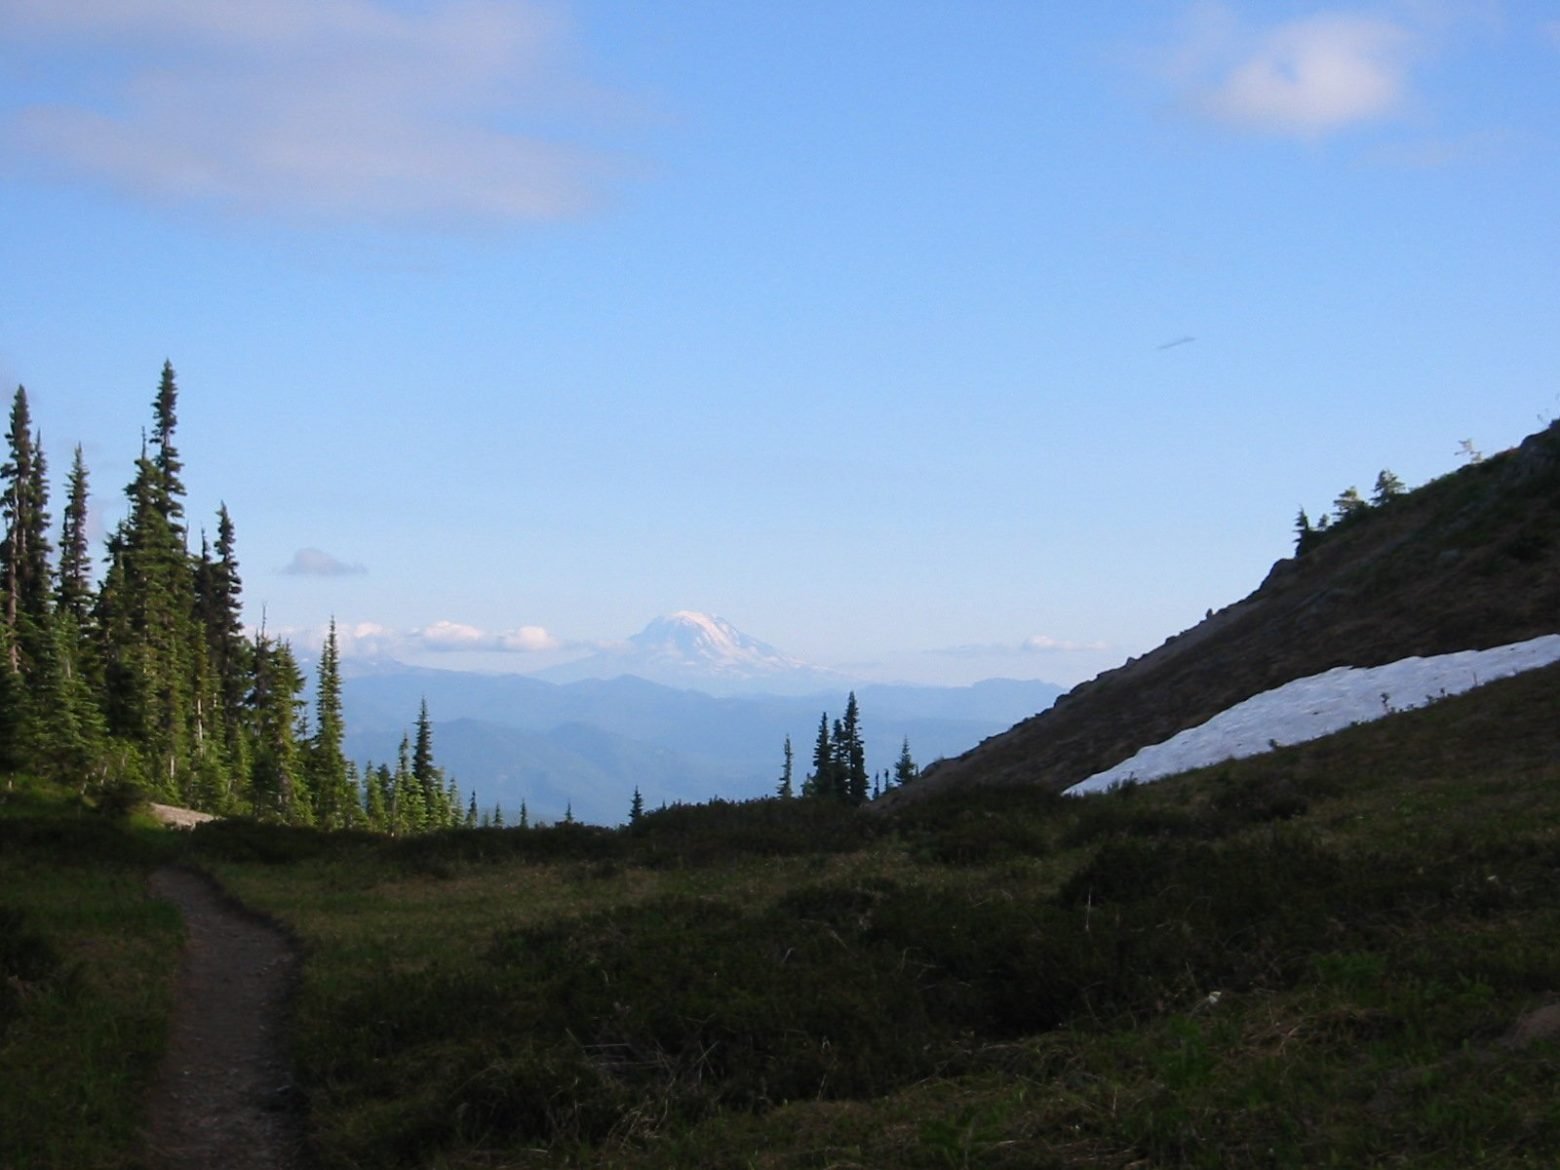 View of Mt. Adams